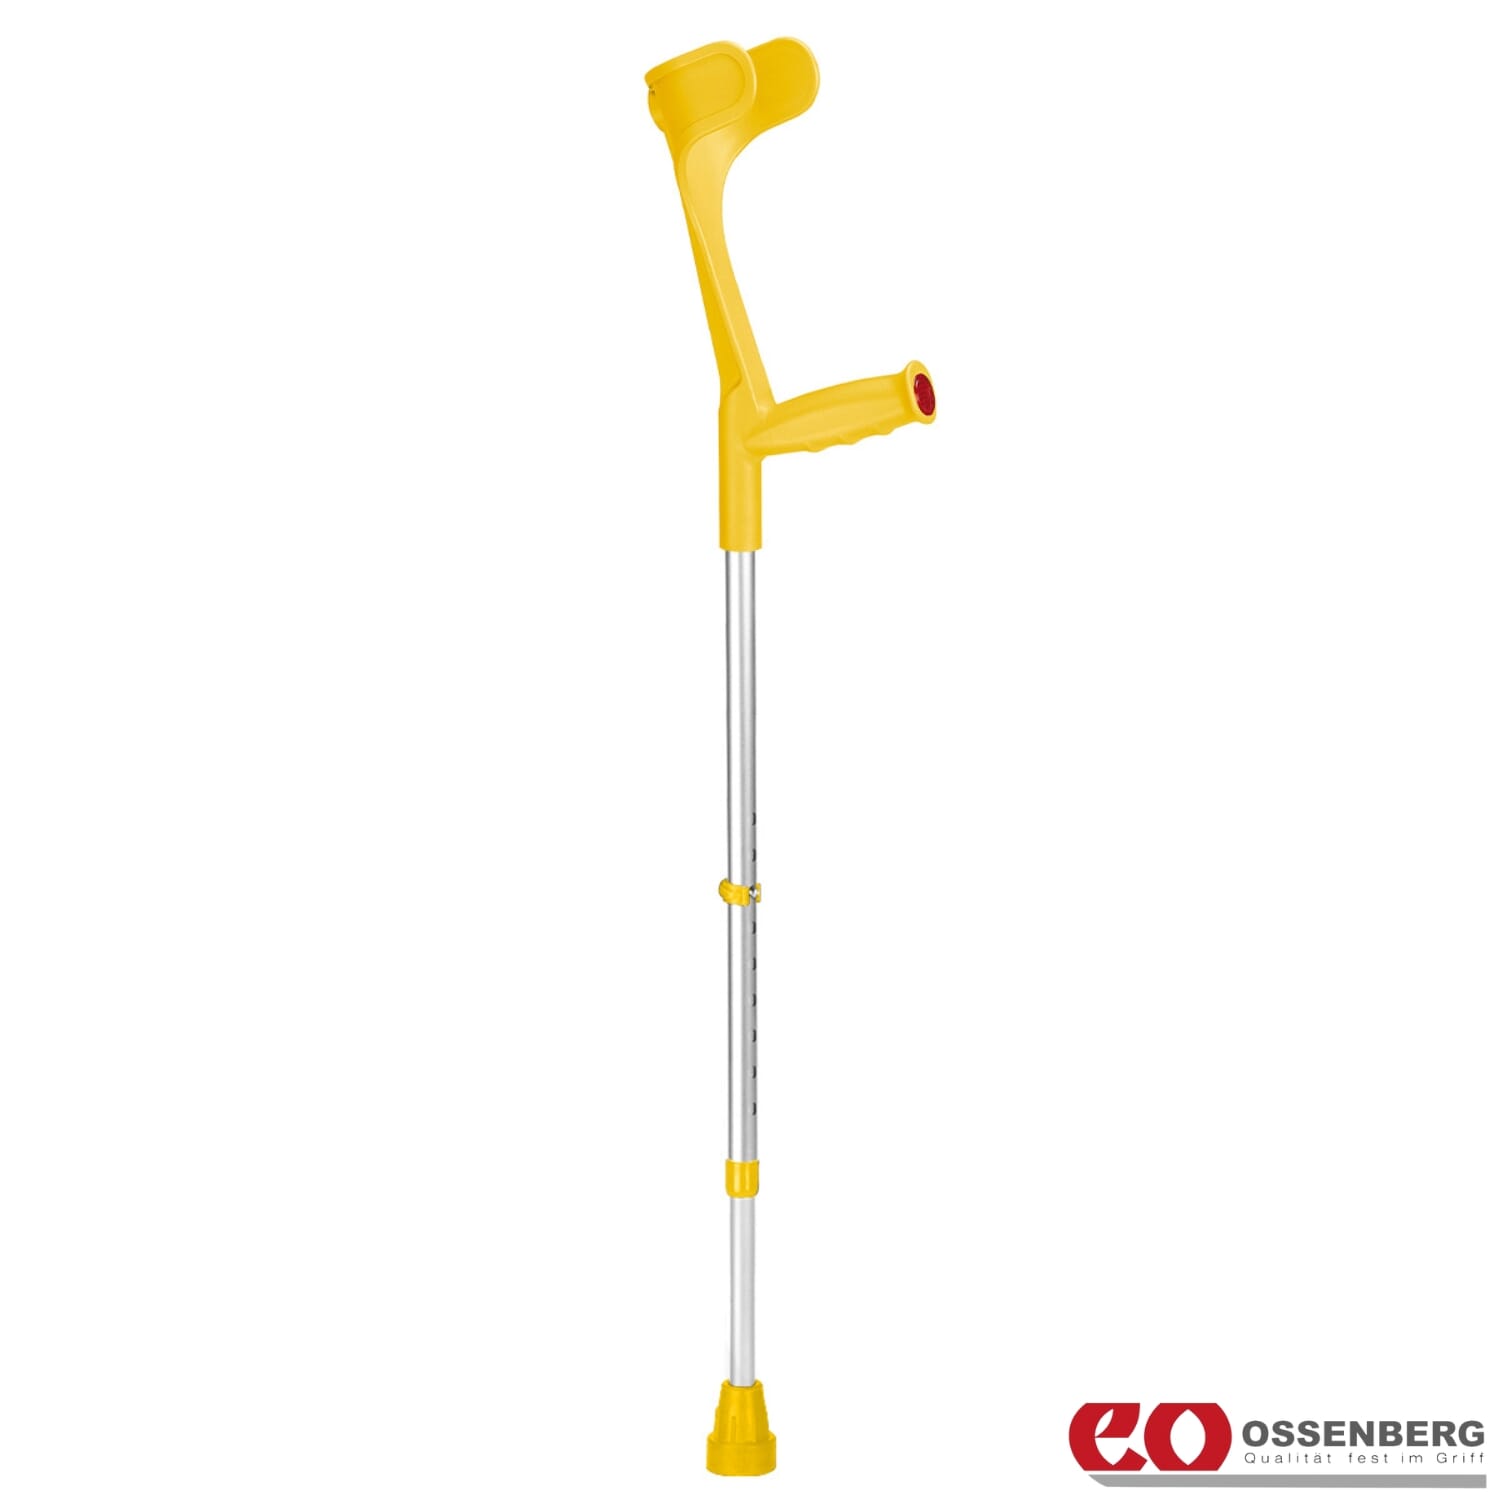 View Ossenberg Open Cuff Crutches Yellow Single information